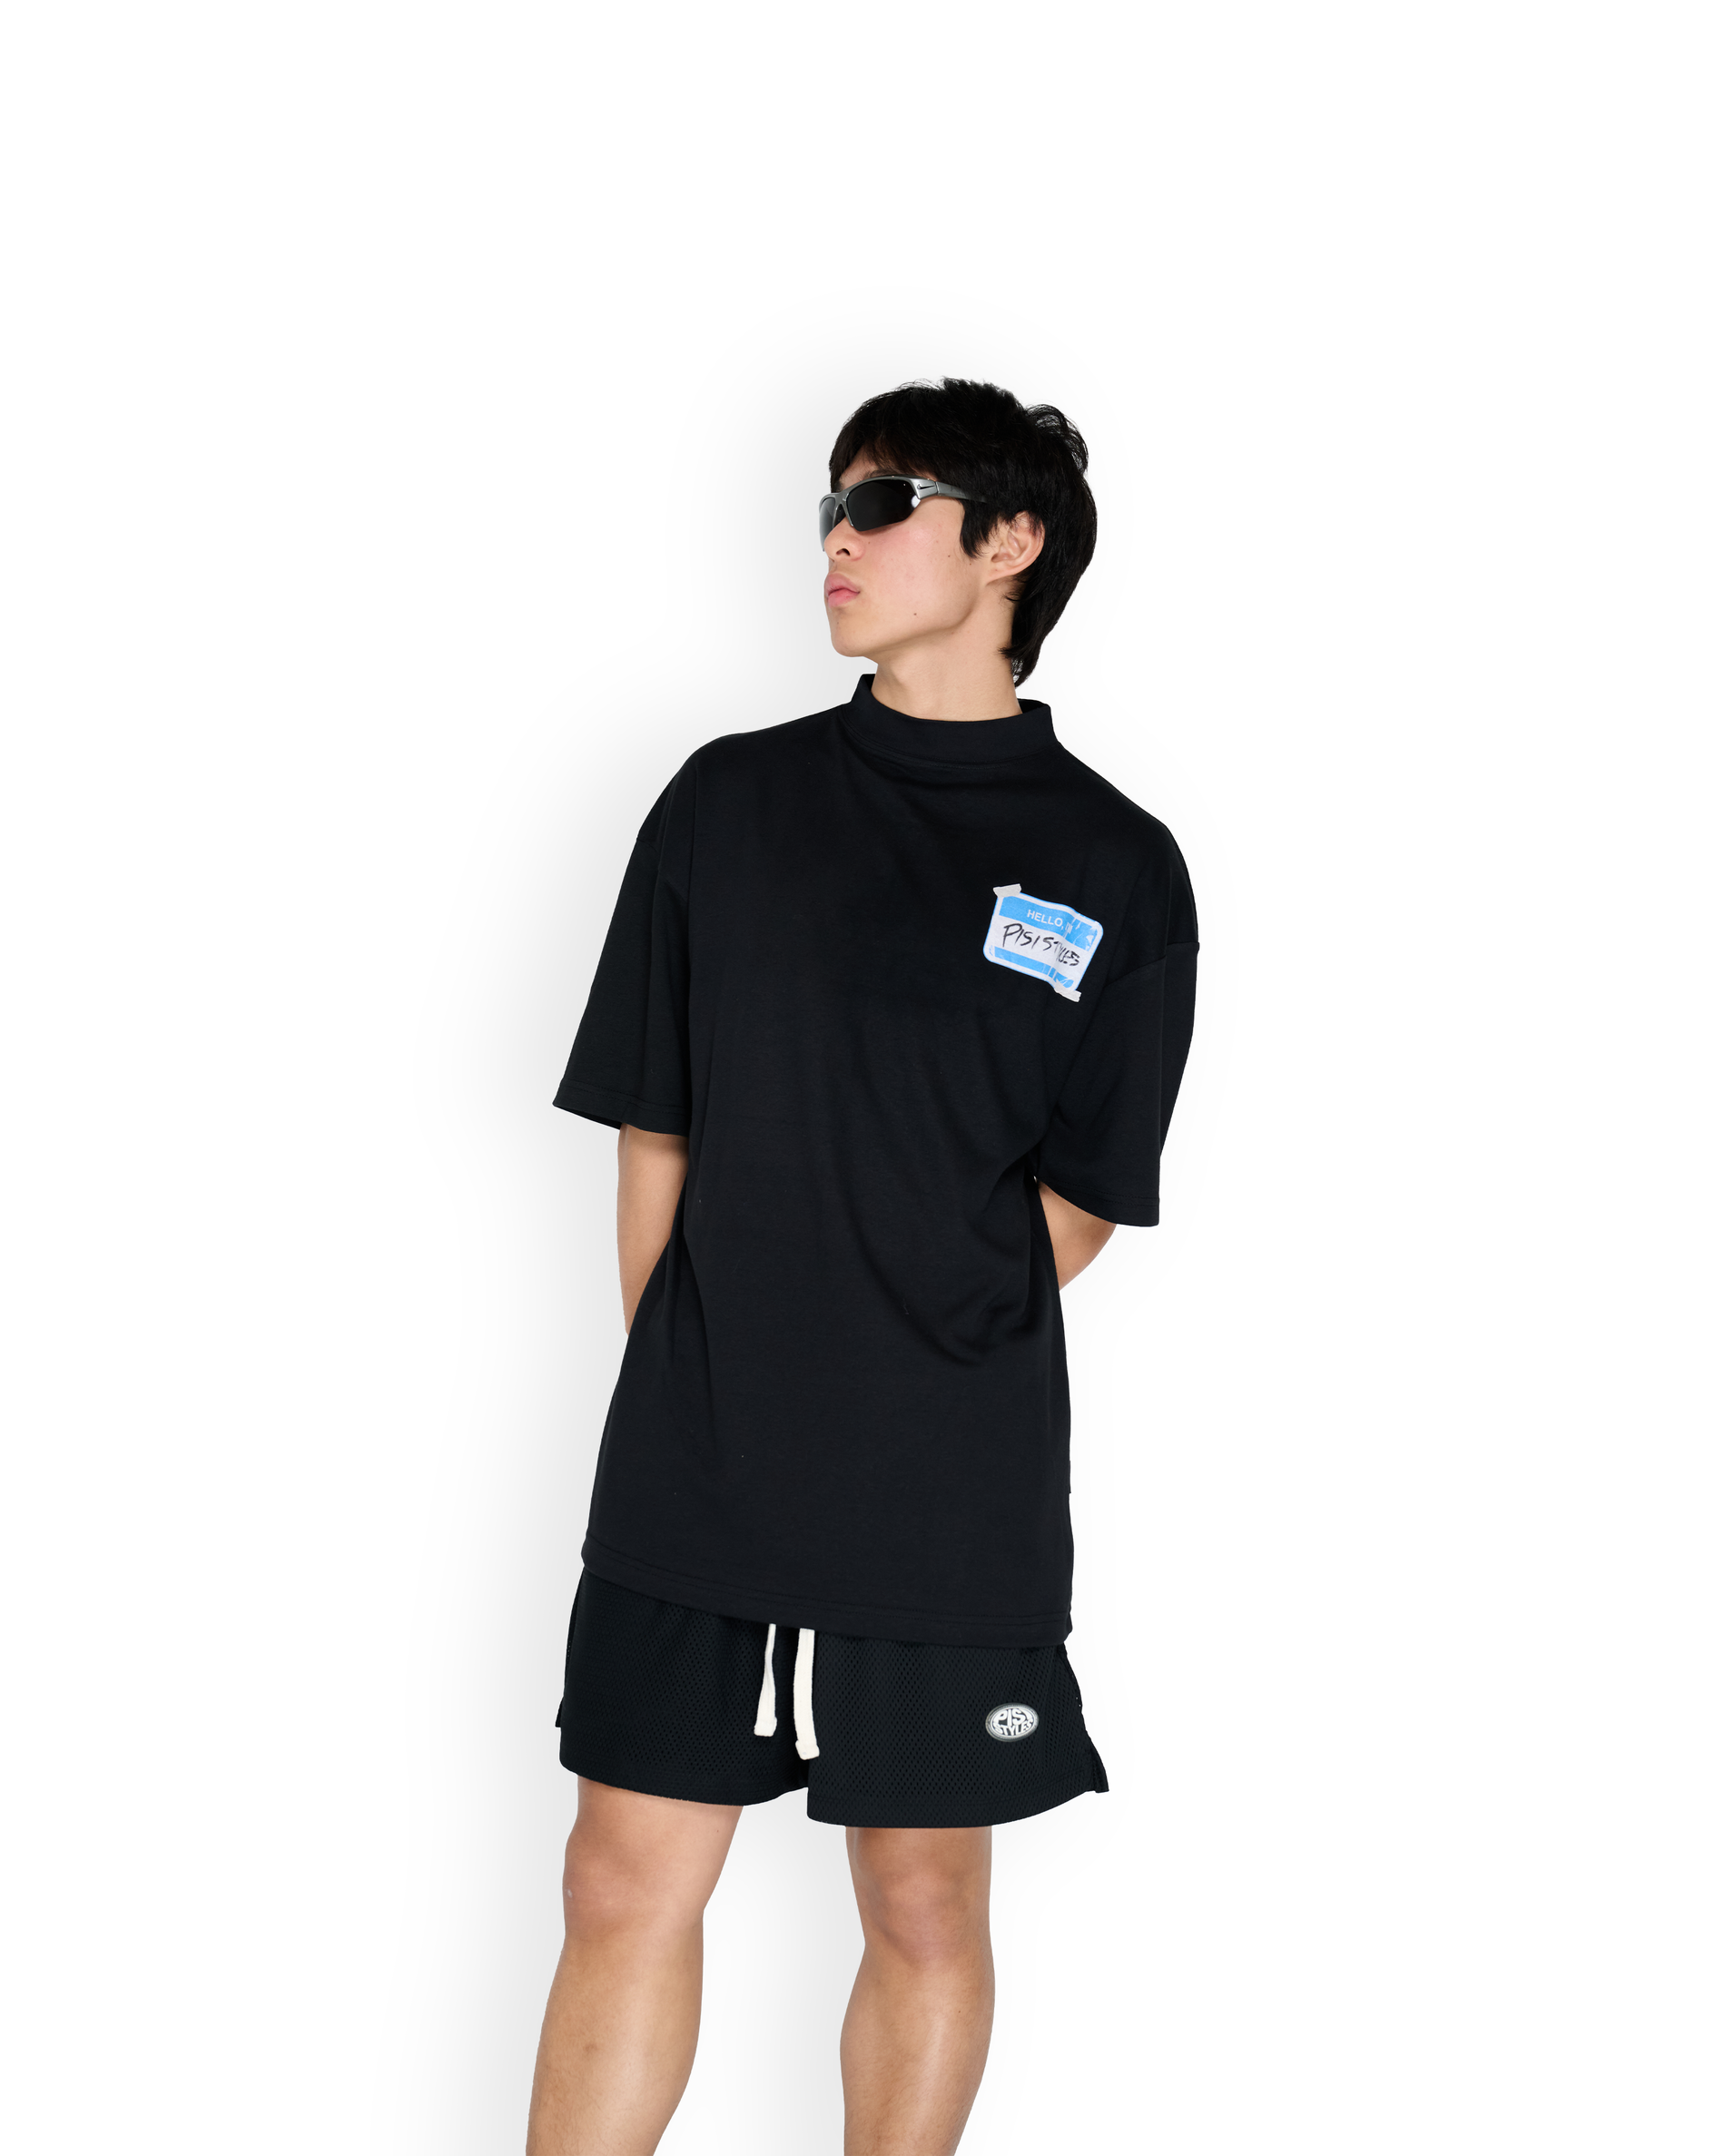 ☄️ เสื้อ Hello, I’m PISI STYLES Parody-VETEMENTS T-Shirt Oversized เสื้อล้อเลียน | Blue-Black